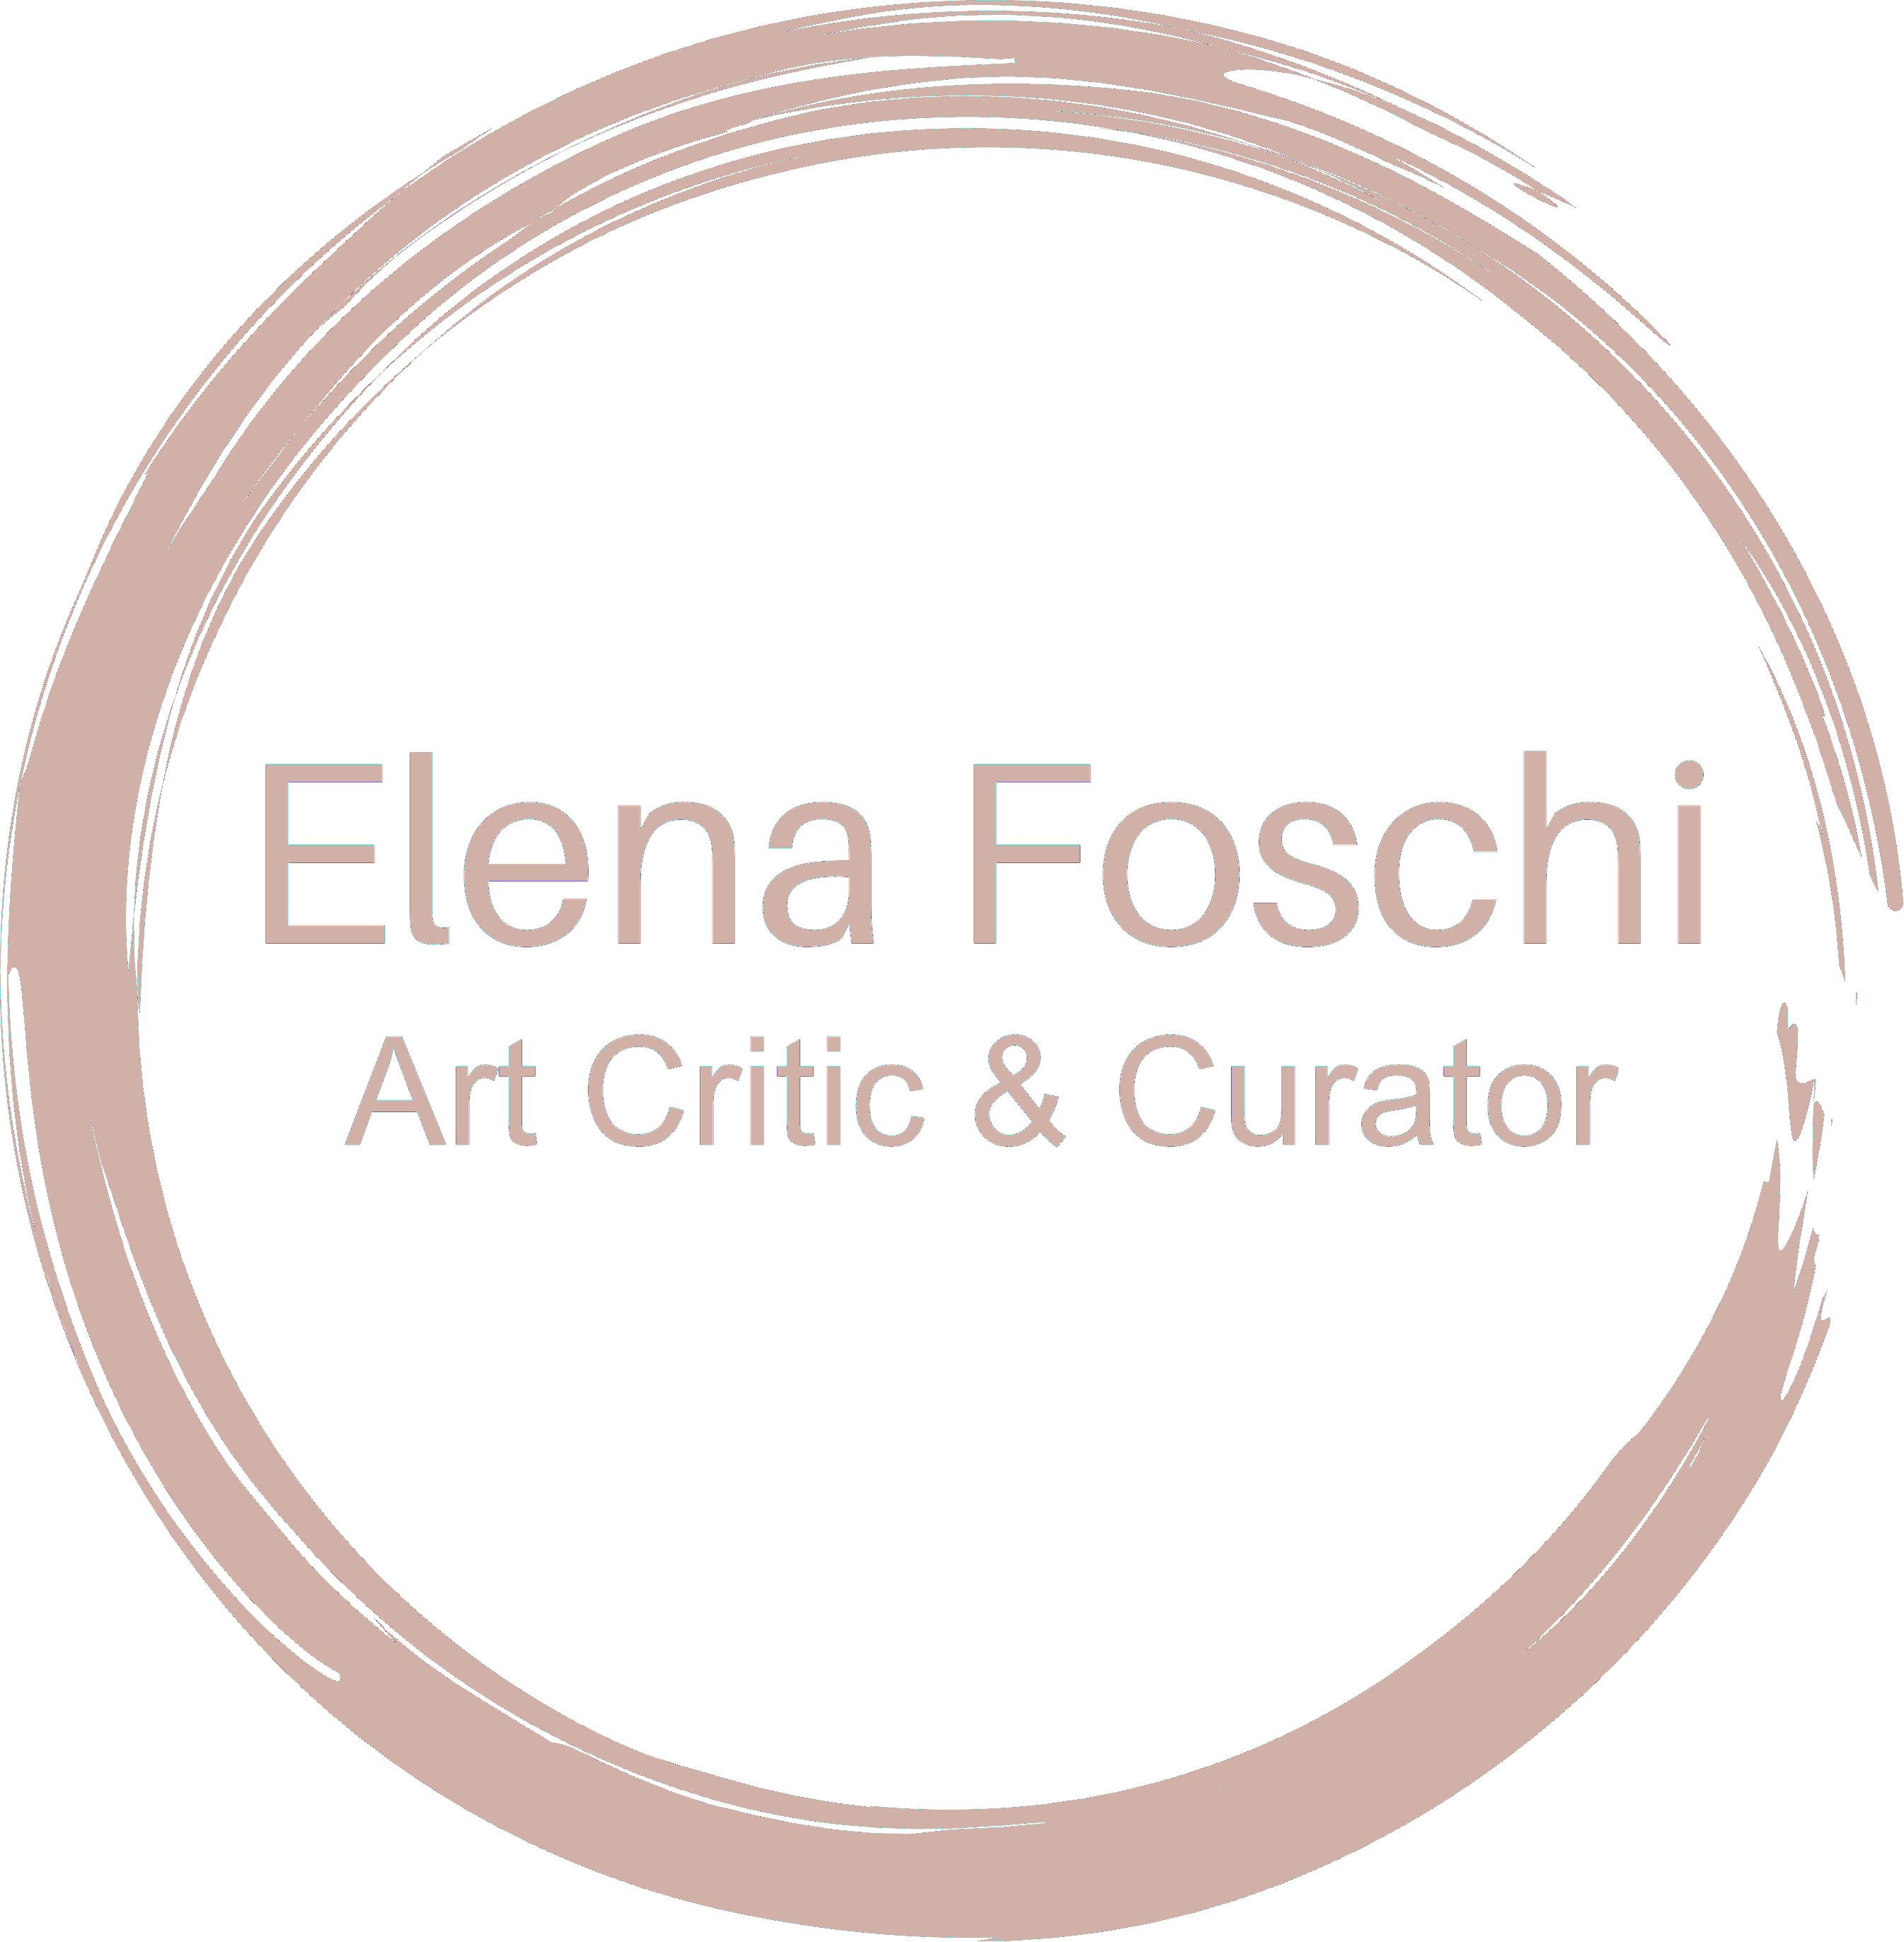 Elena Foschi art critic & curator